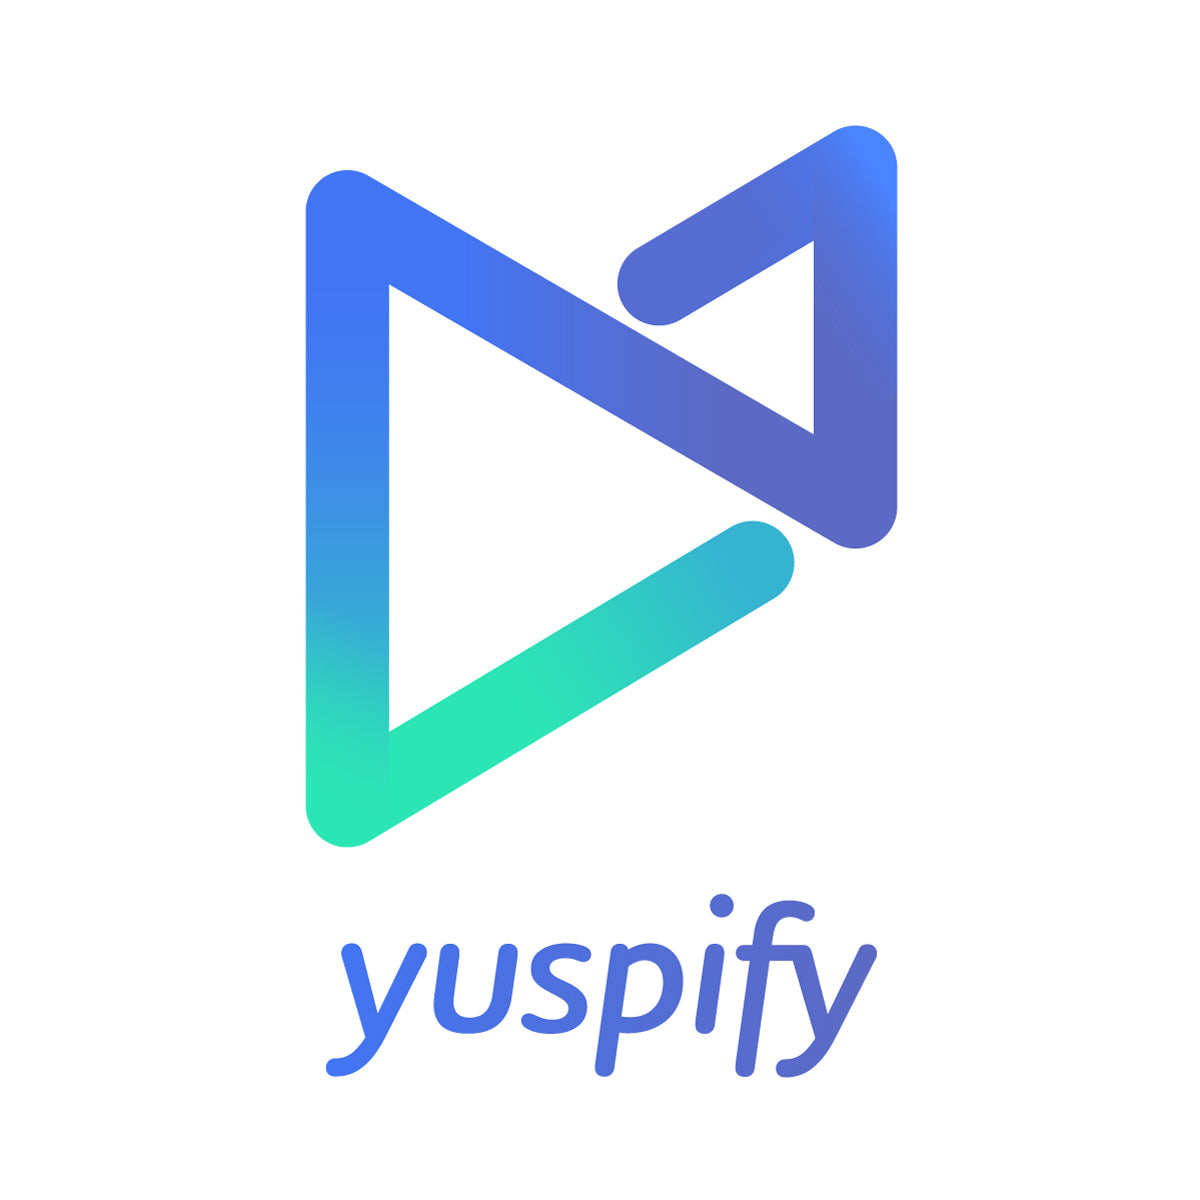 Yuspify Recommendation System